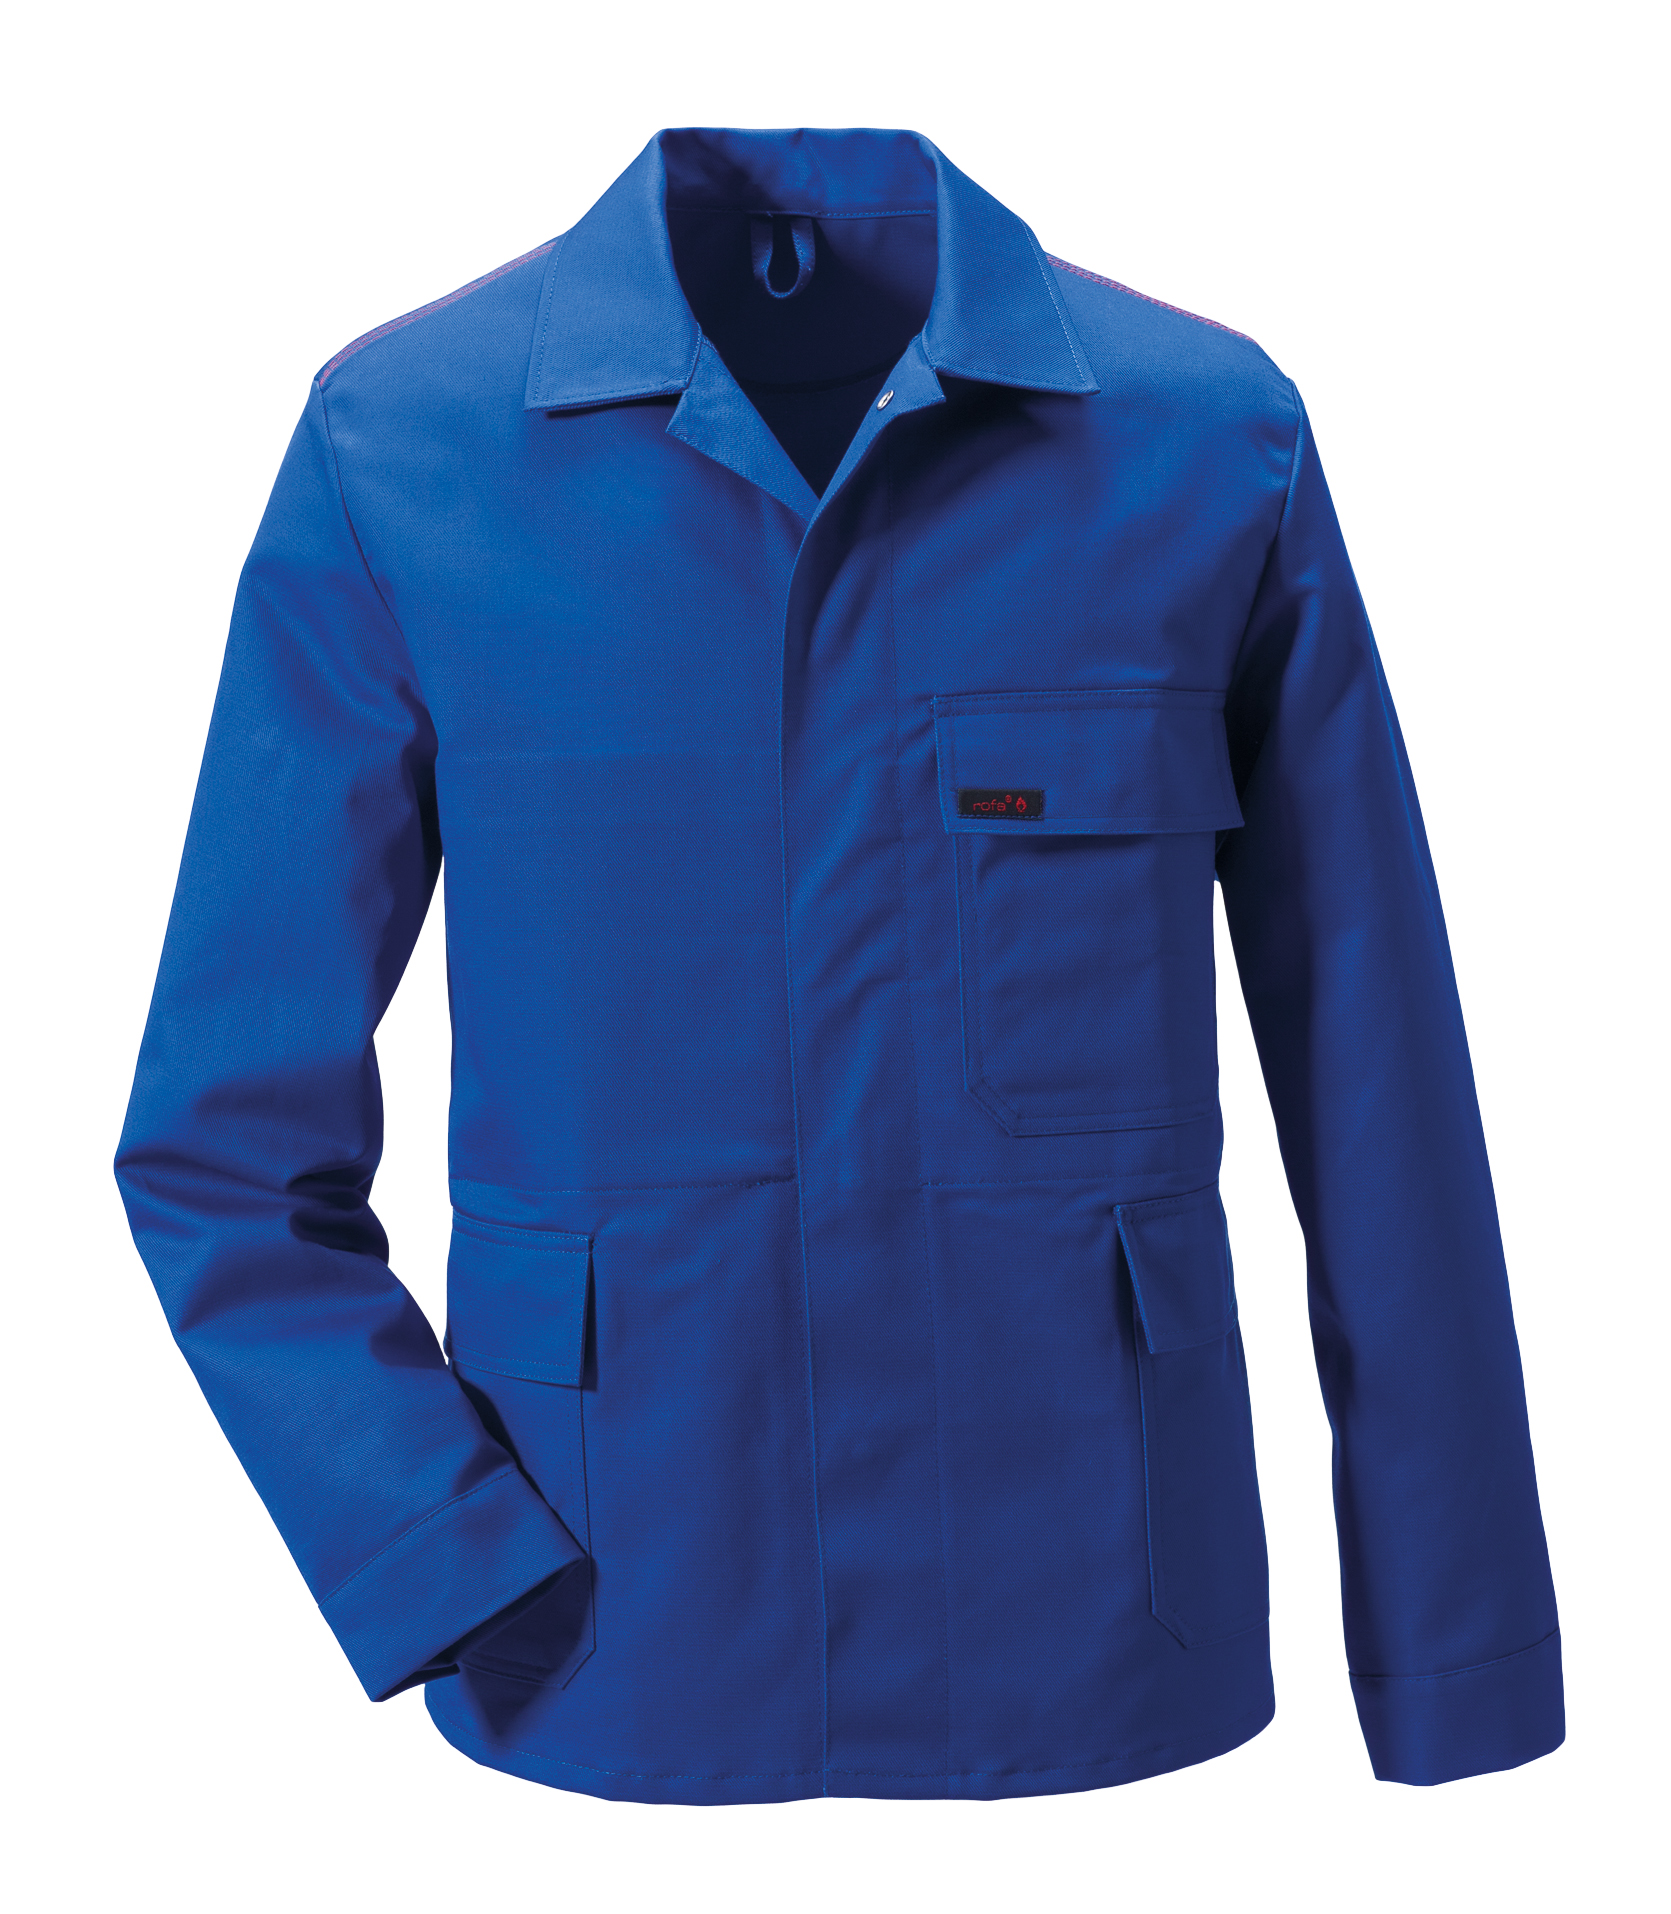 ROFA Schweißerschutzjacke Arbeitsjacke Schutzjacke Proban kornblau ca 330 g